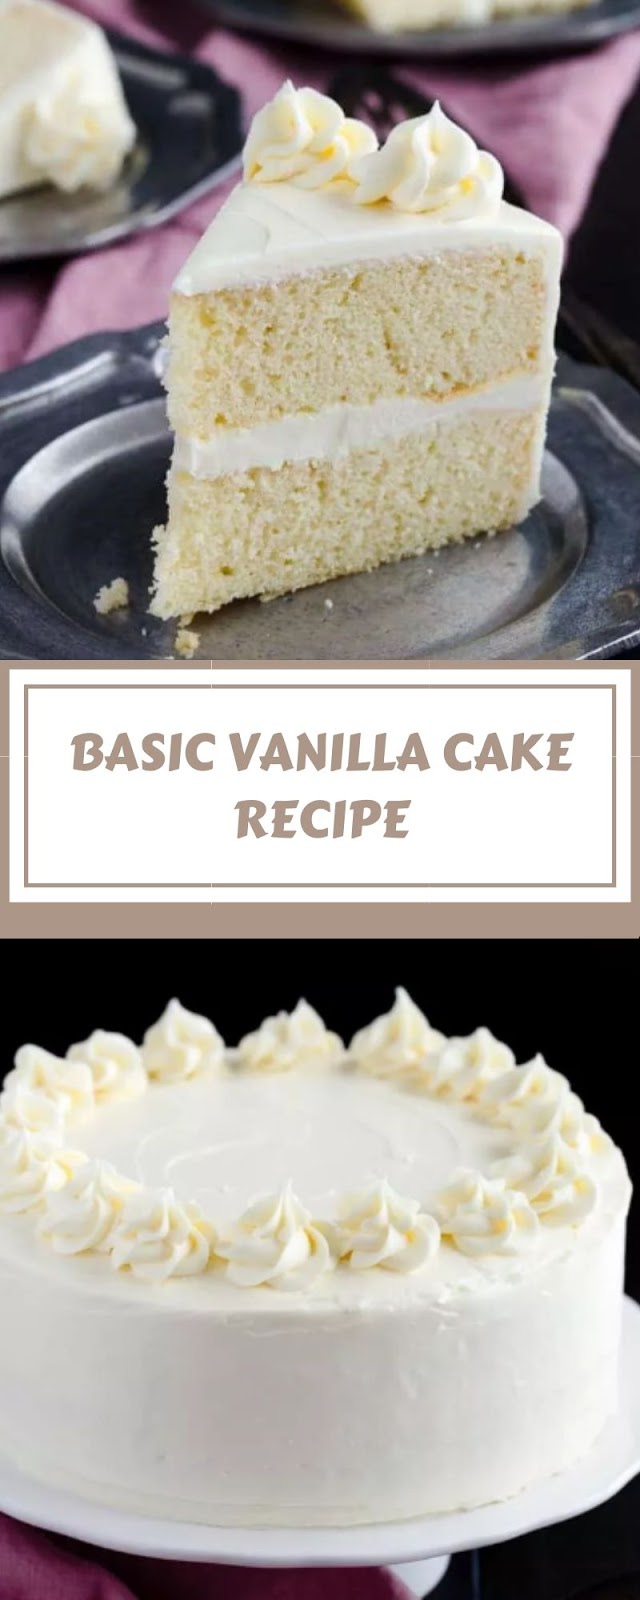 BASIC VANILLA CAKE RECIPE